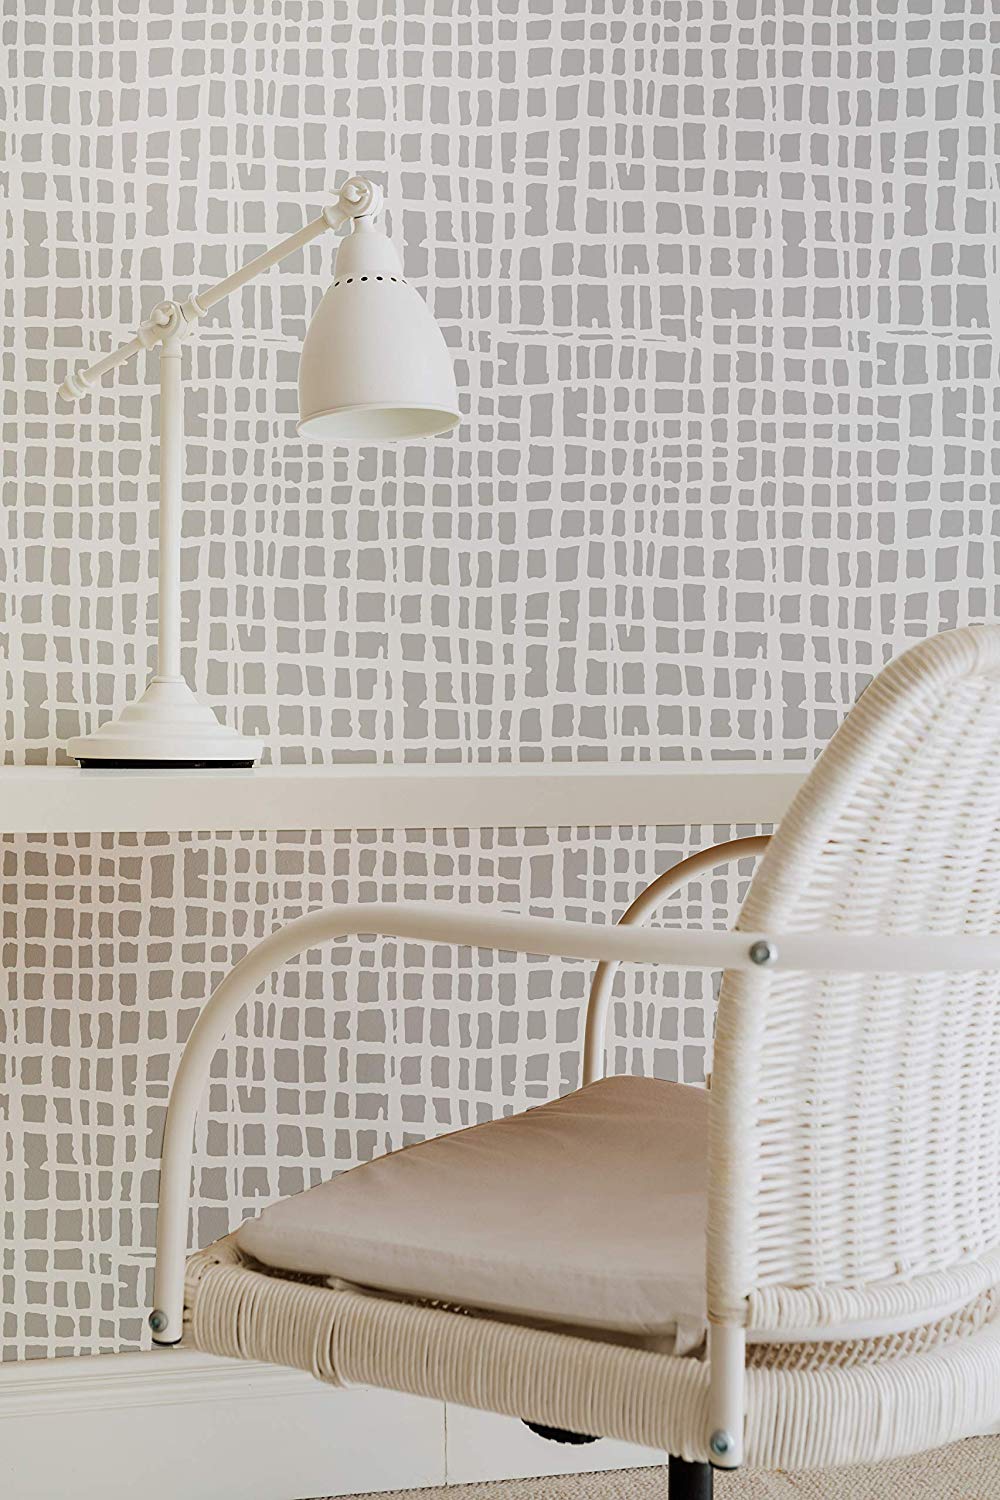 Design For Small Bedroom Wall - HD Wallpaper 